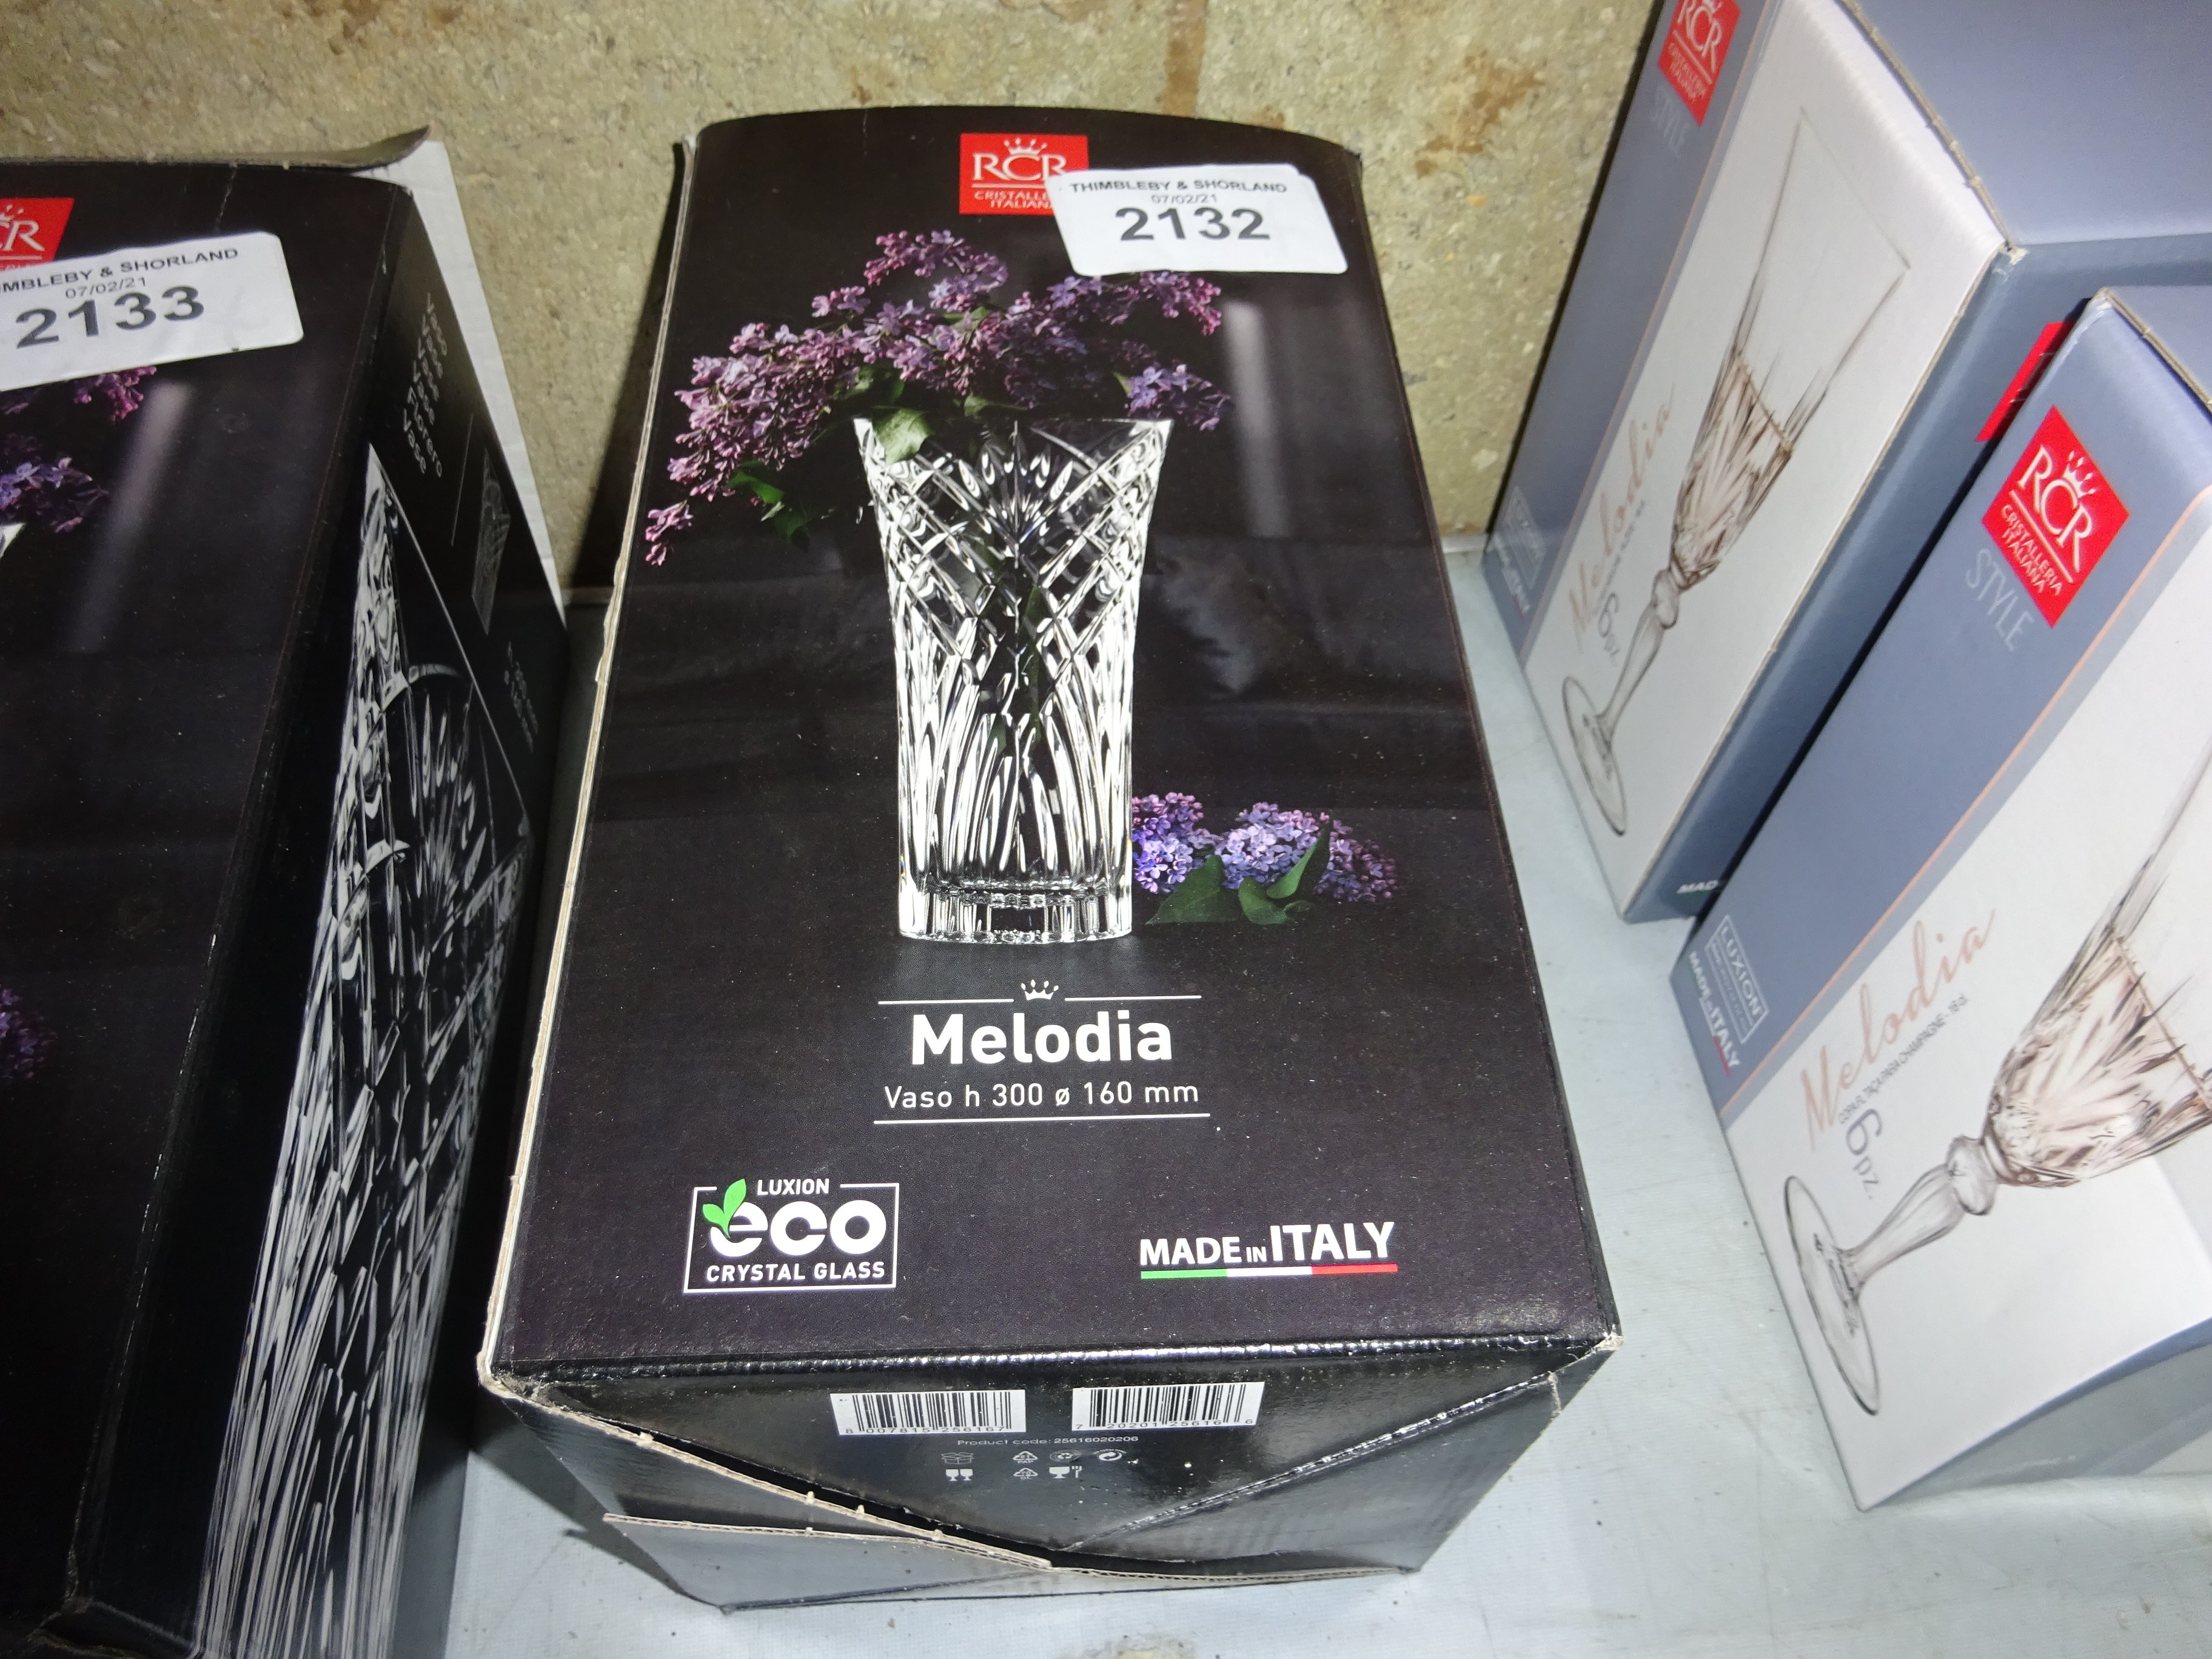 New Melodia crystal vase.